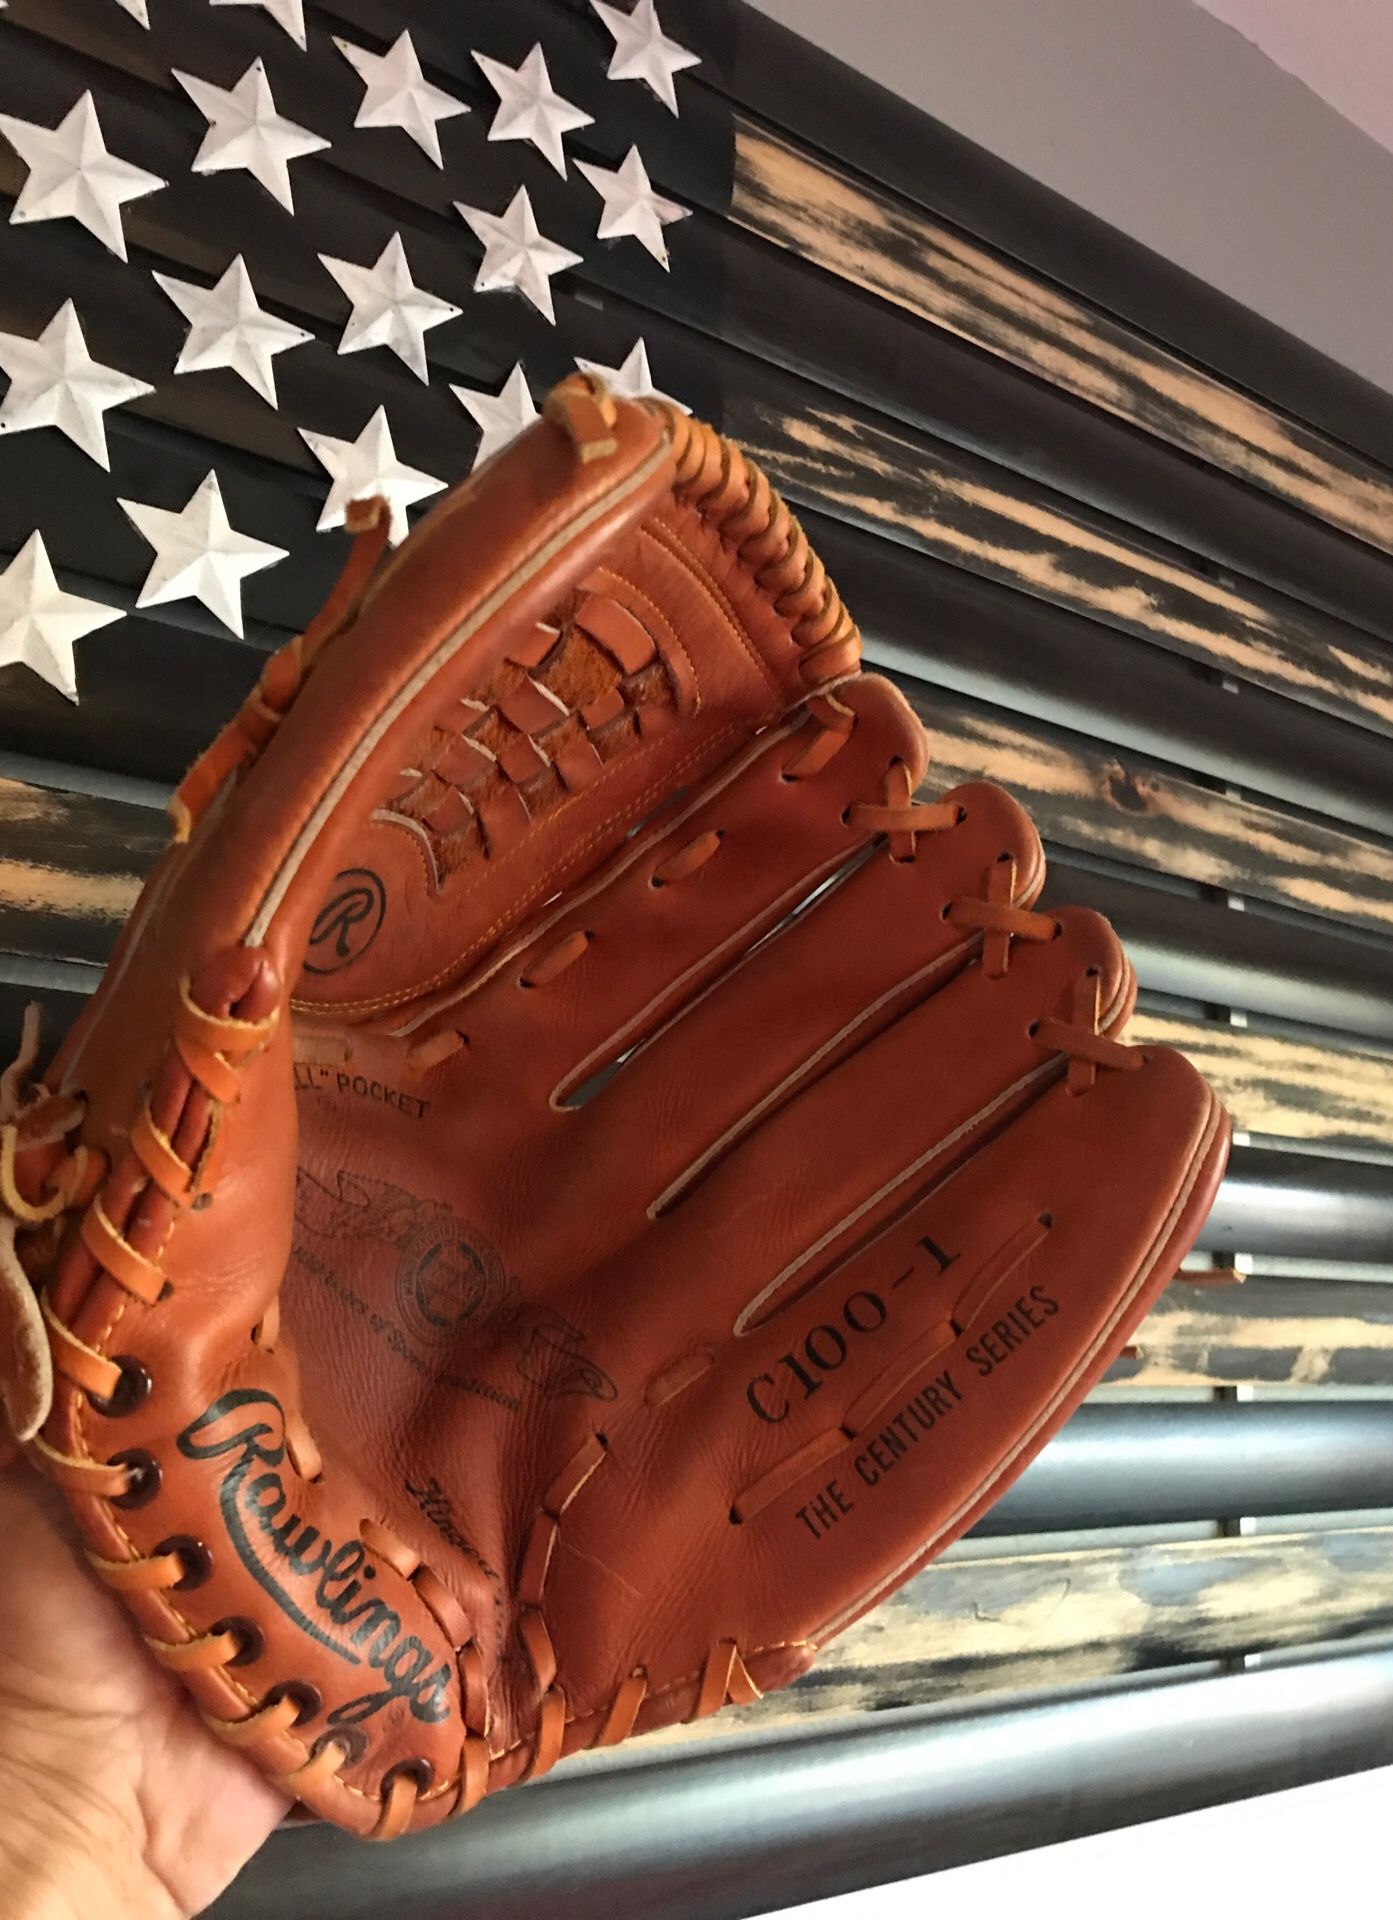 Rawlings Softball baseball glove